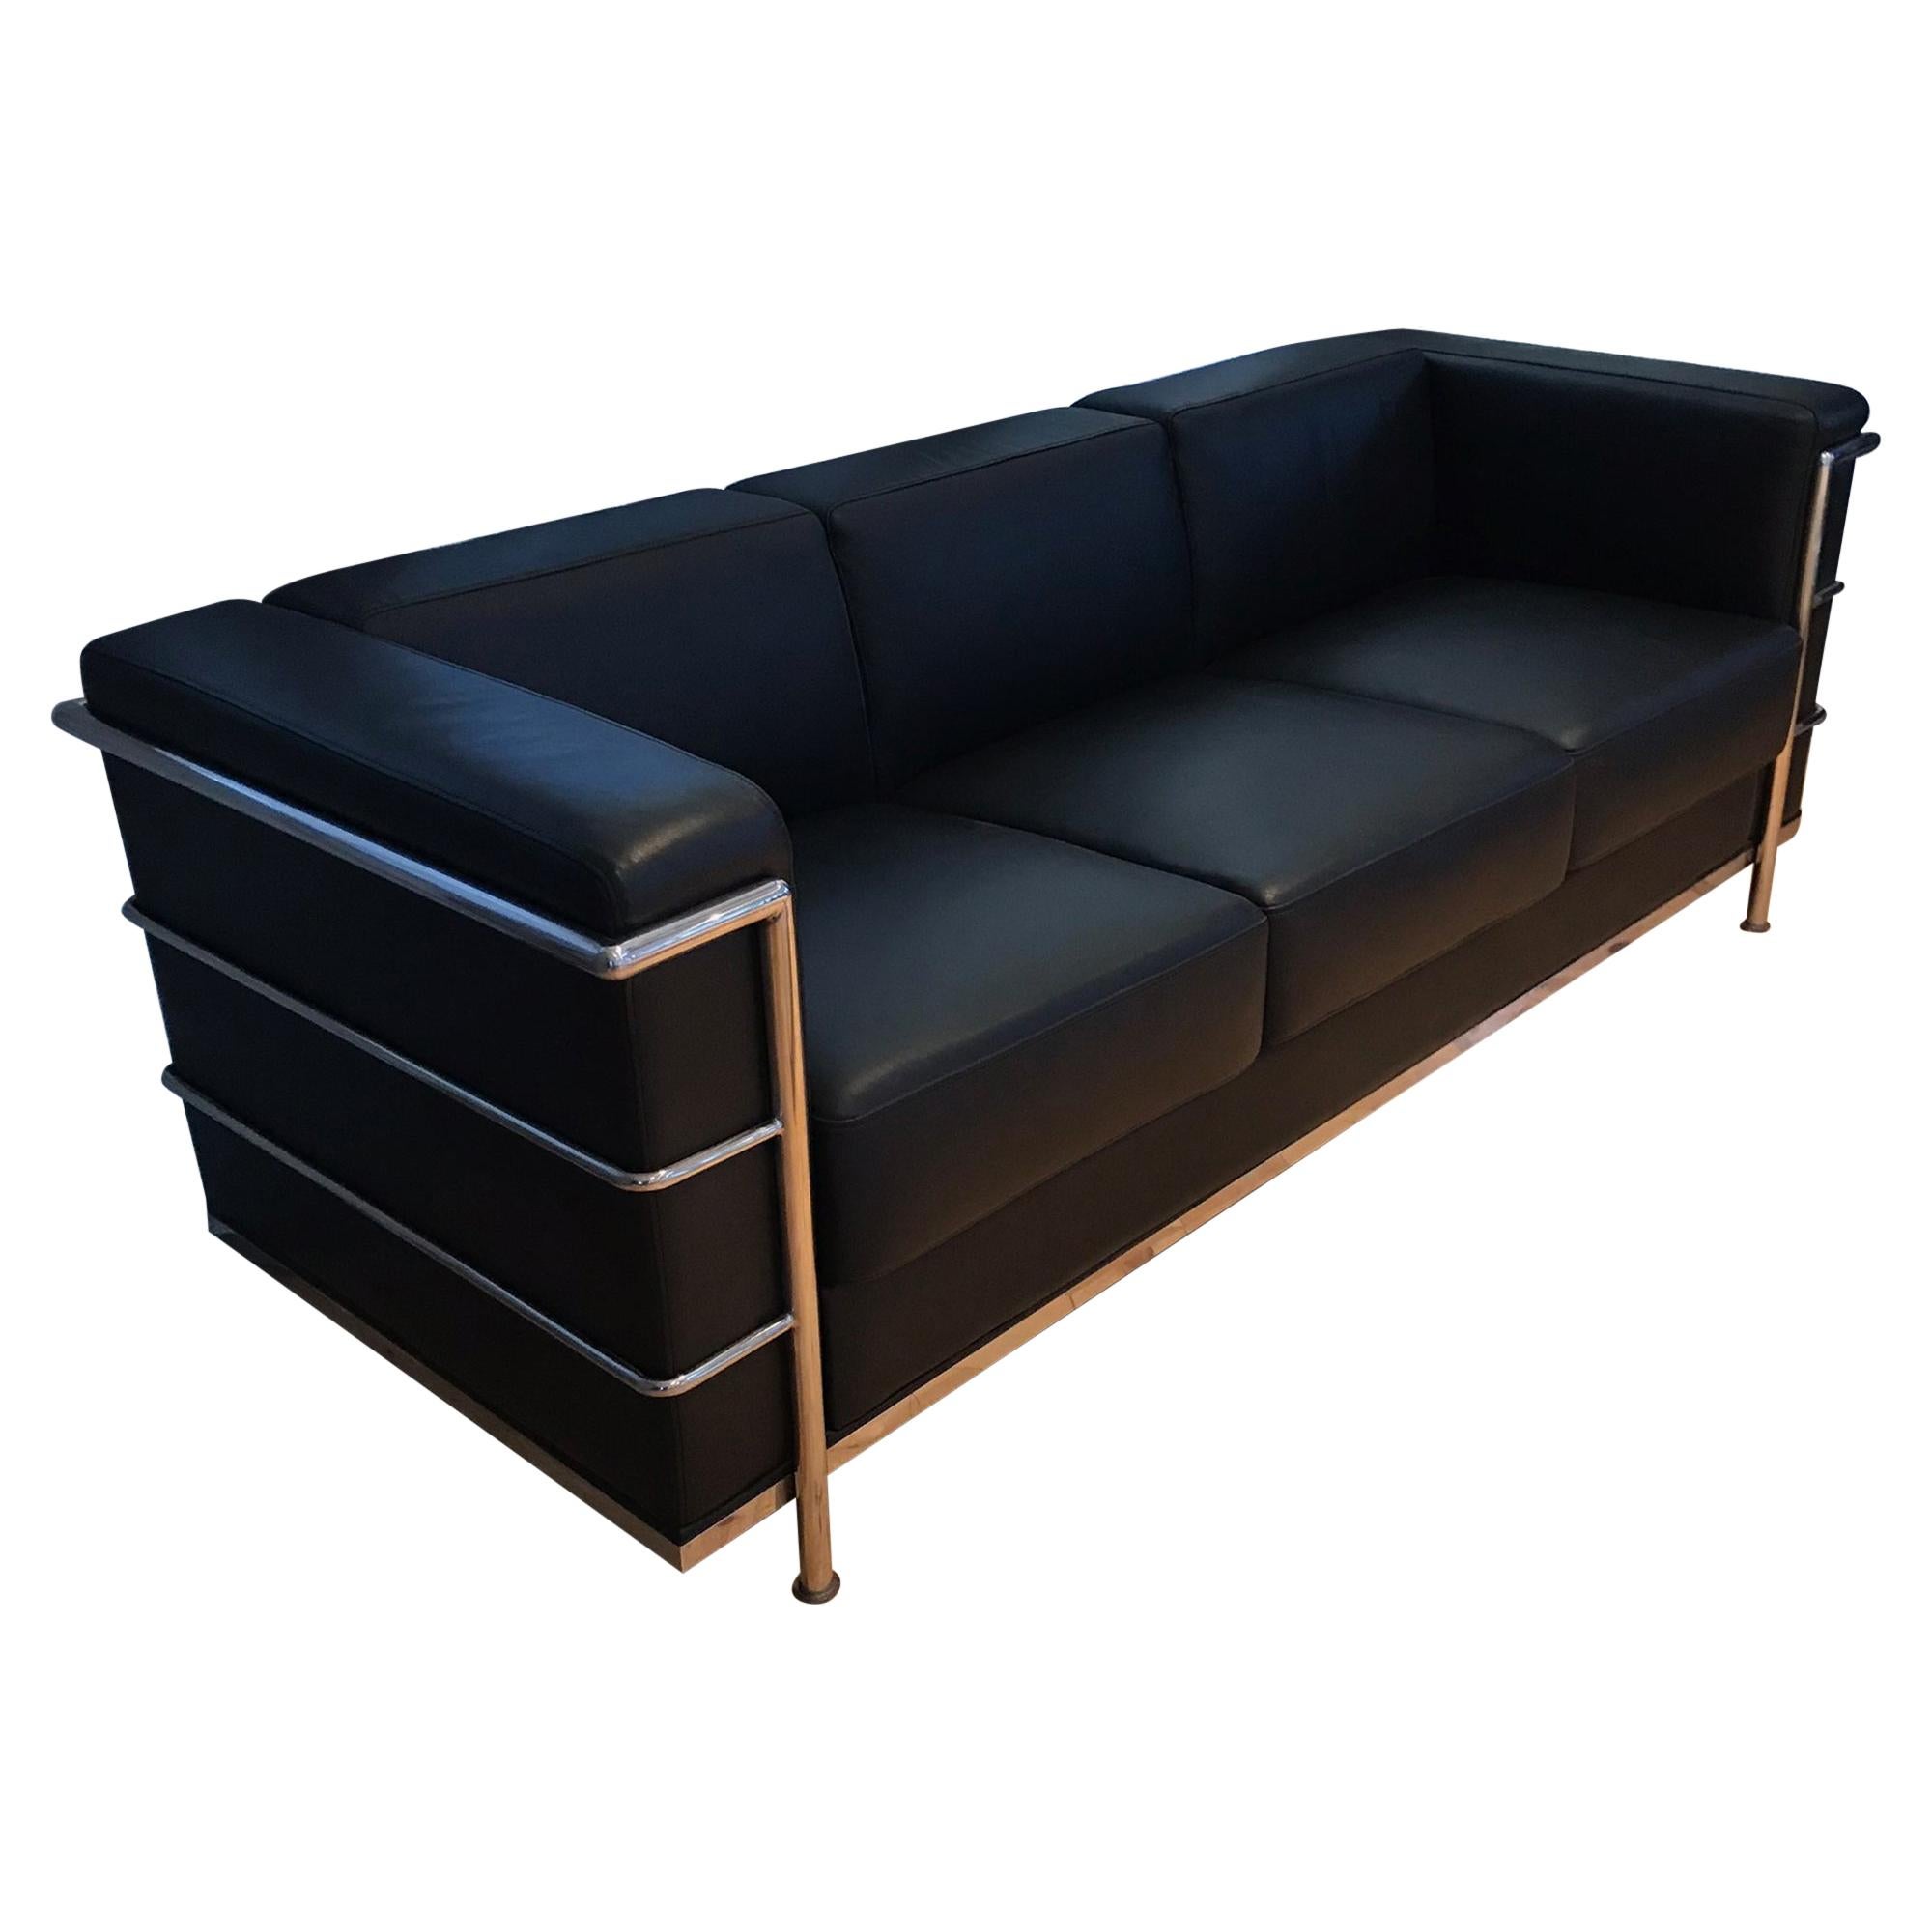 Modern Le Corbusier LC2 Design Three-Seat Classic Chrome and Black Leather Sofa